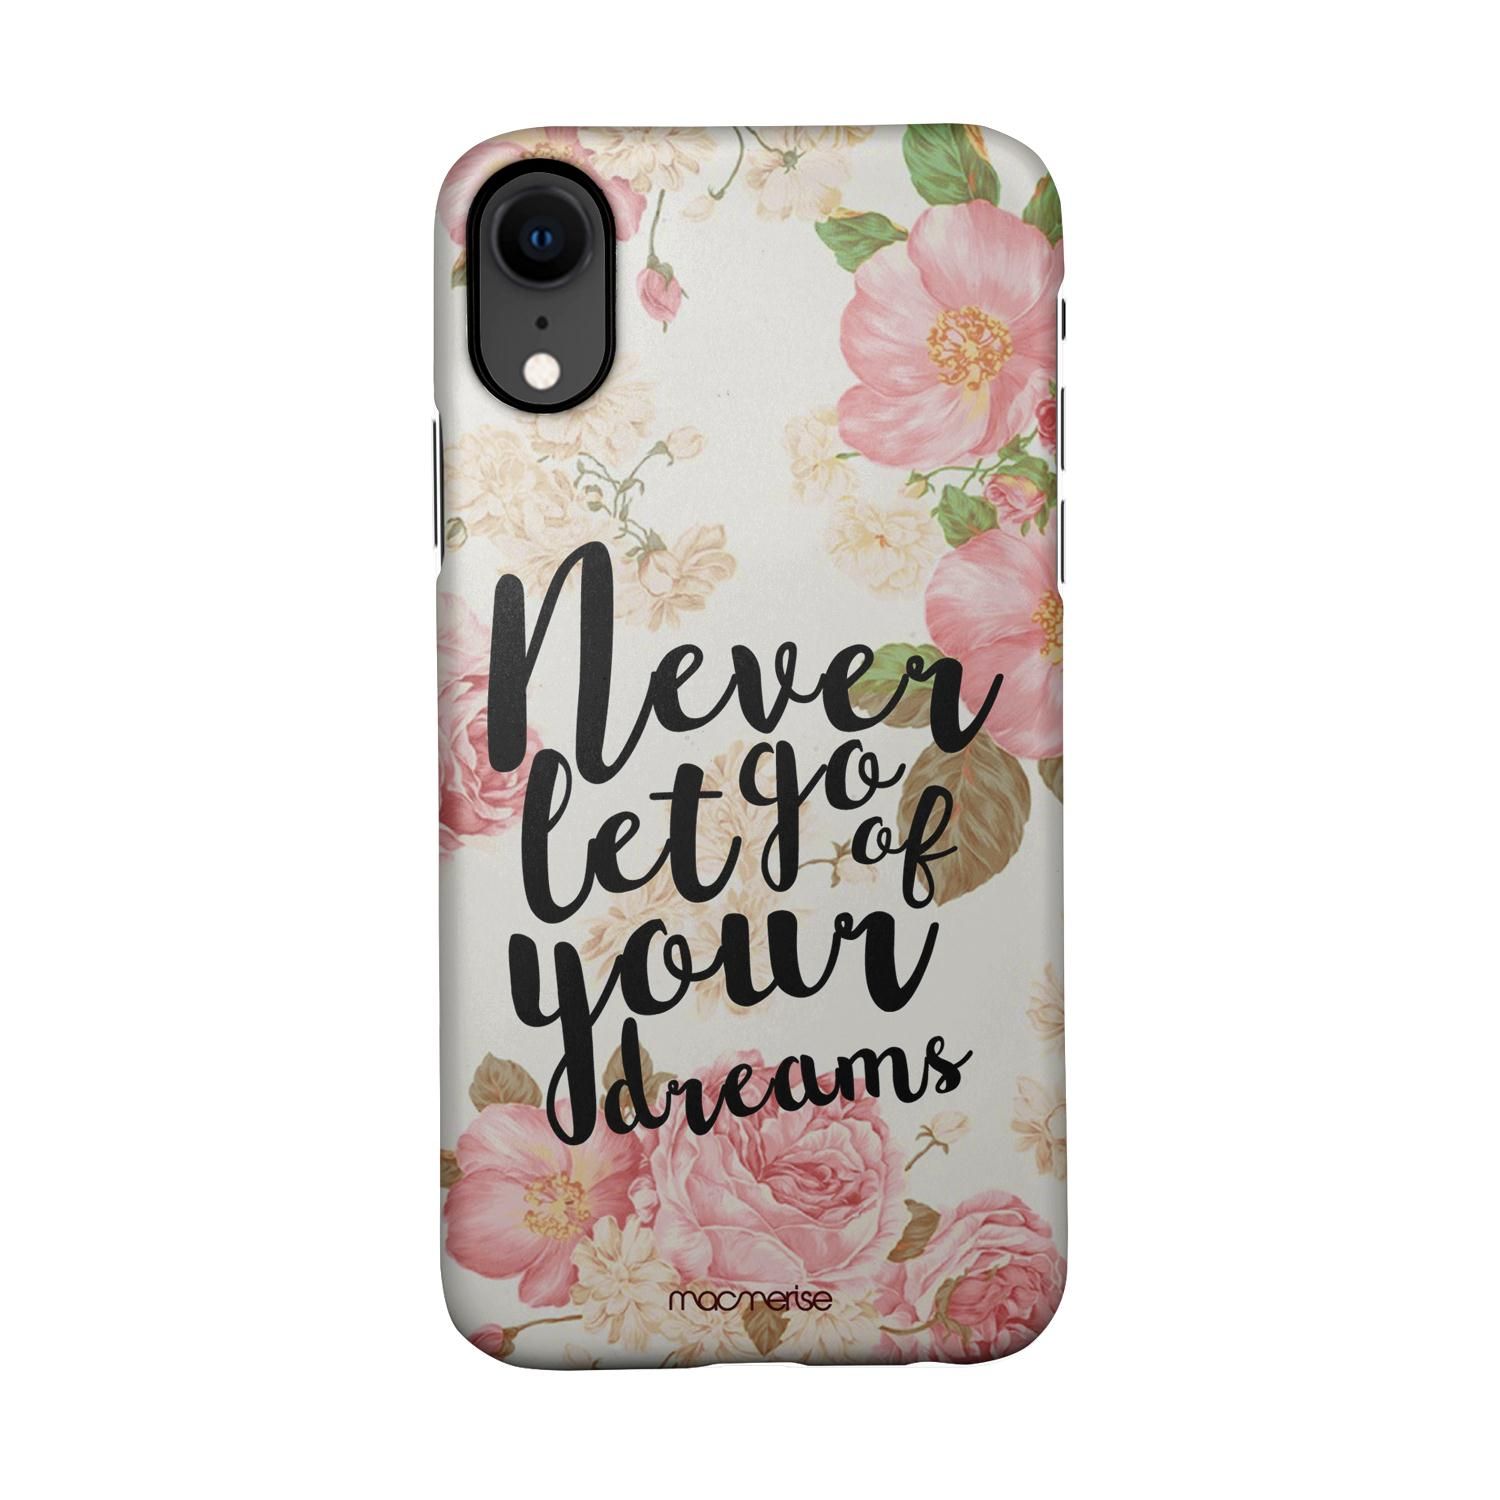 Buy Your Dreams - Sleek Phone Case for iPhone XR Online